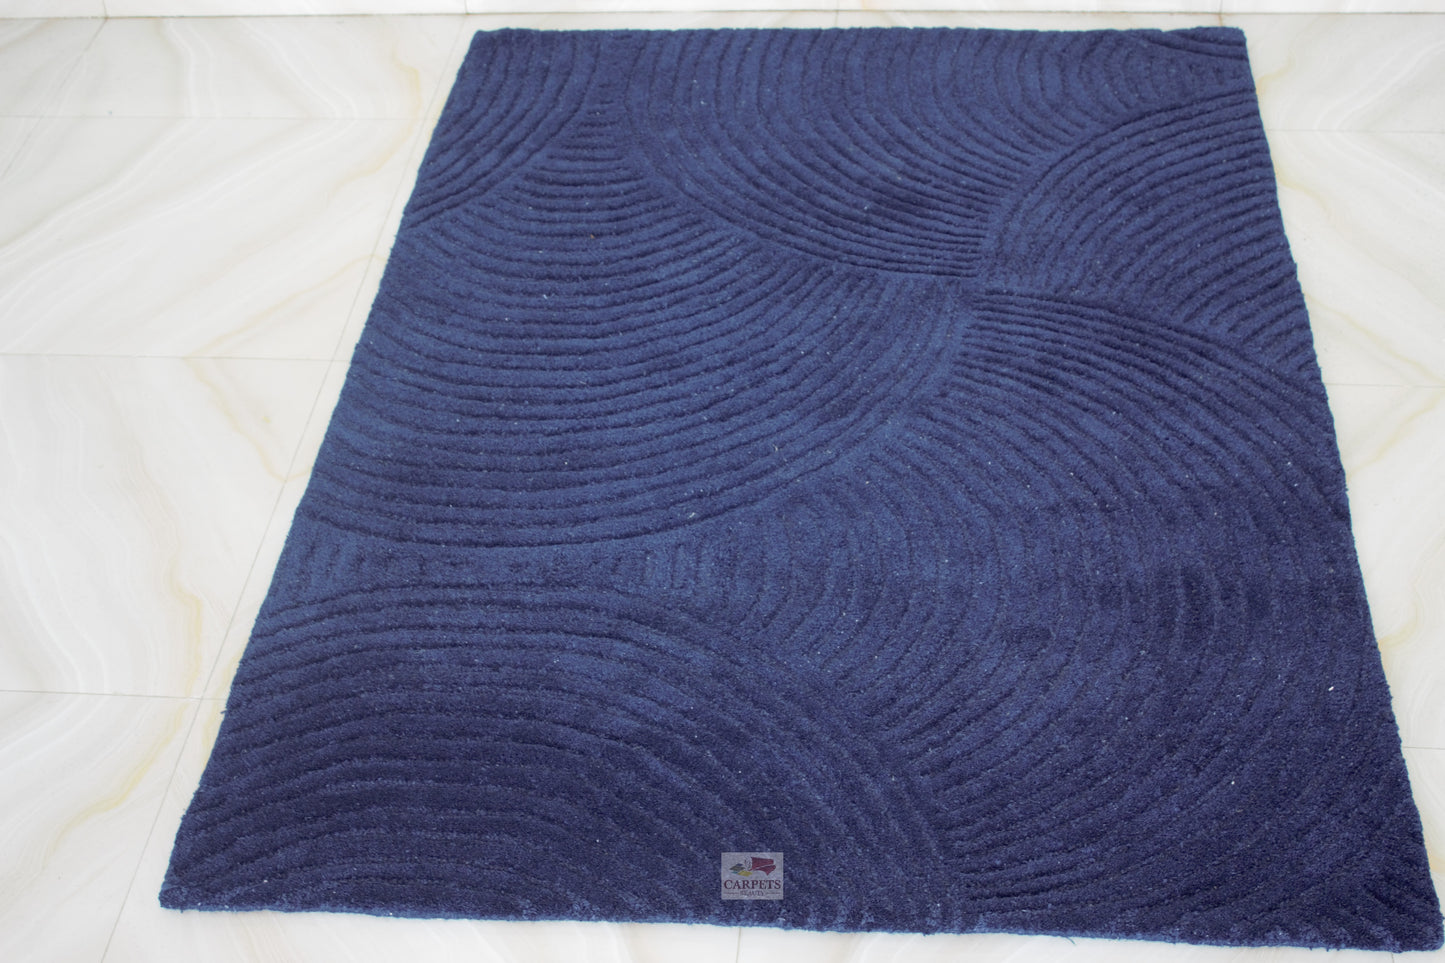 Navy blue designer carpet for your home